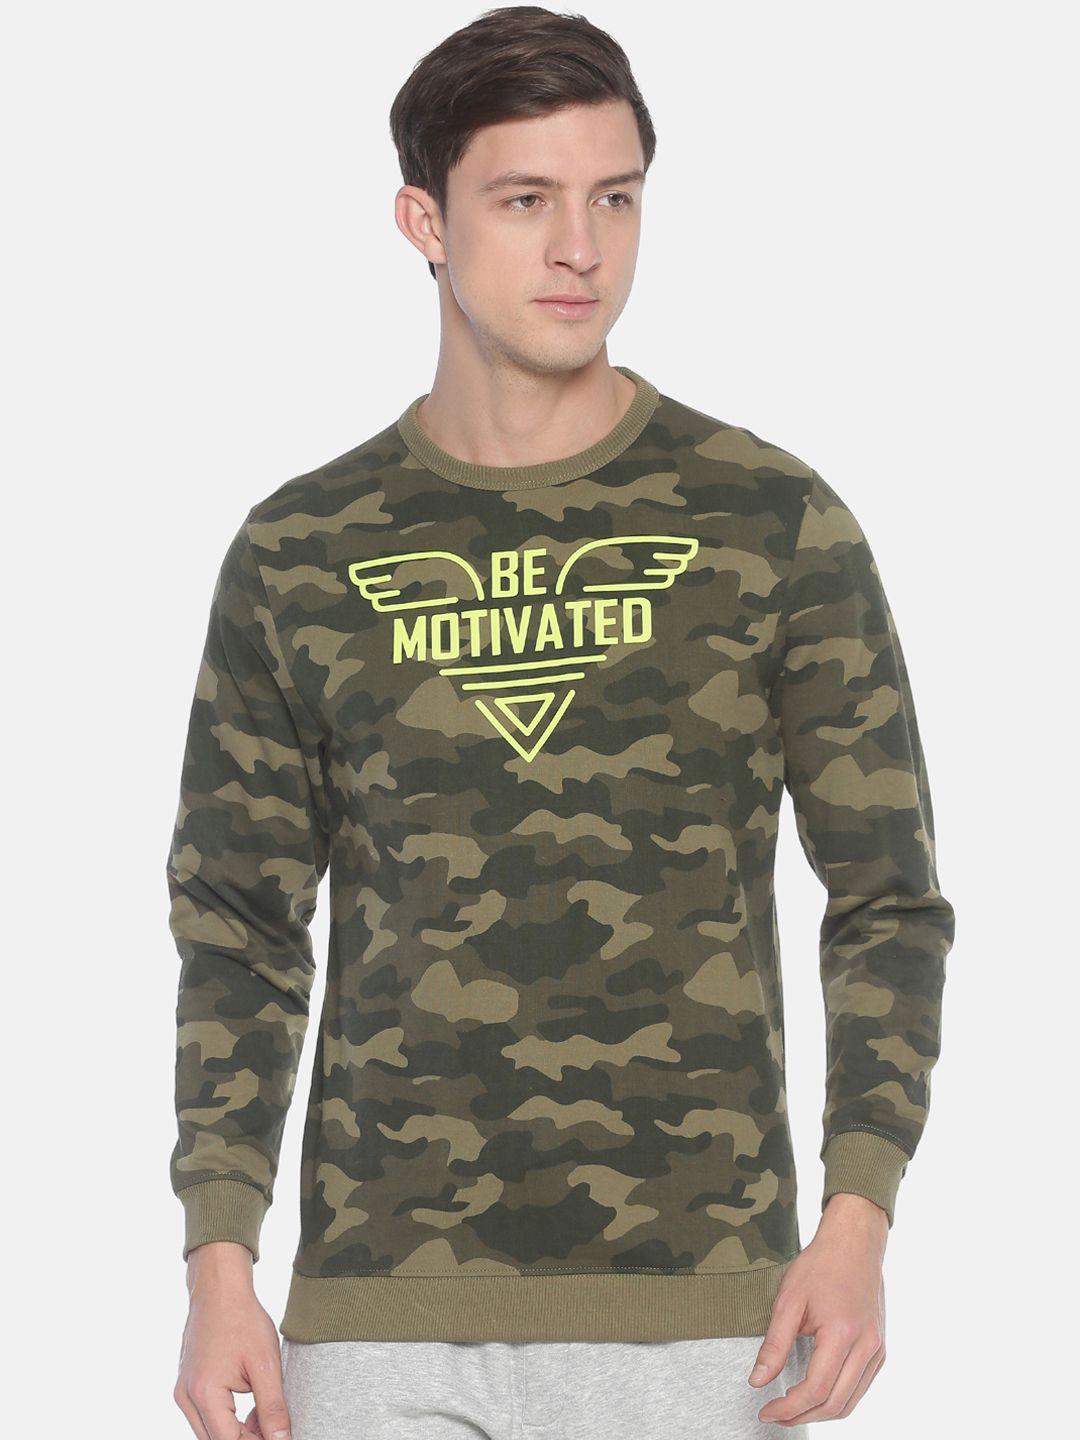 steenbok-men-green-camouflage-printed-sweatshirt